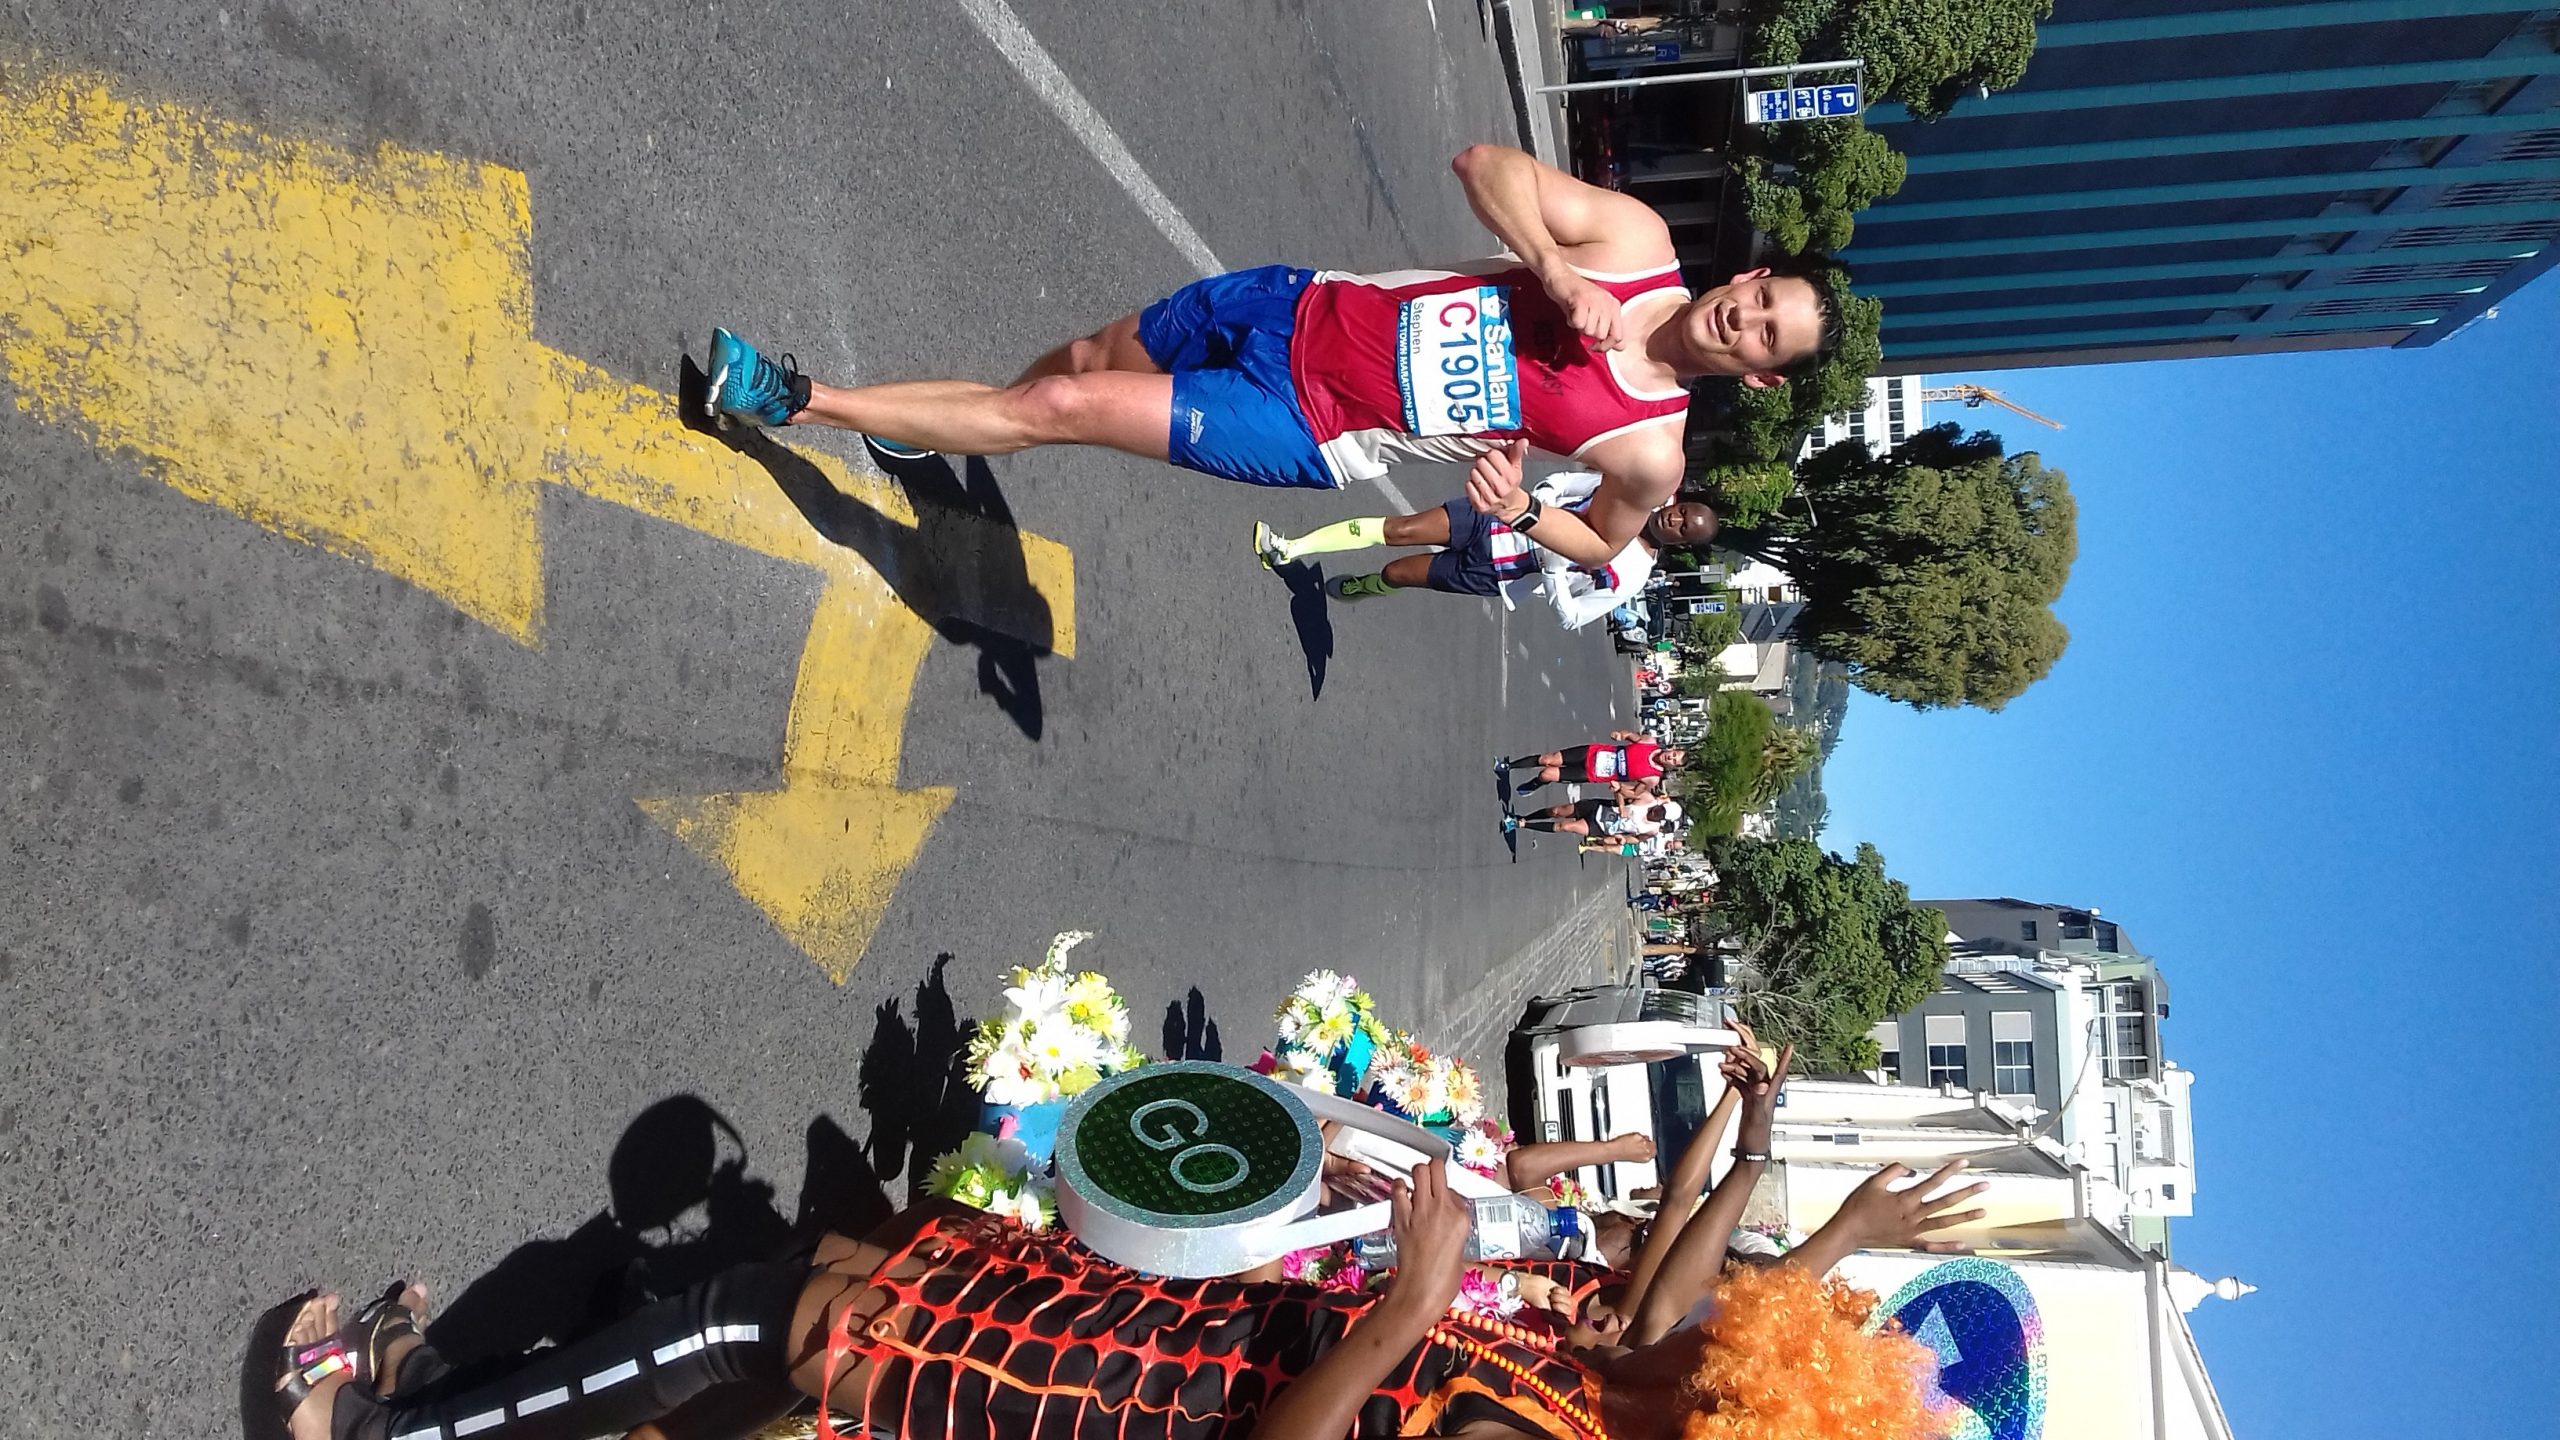 Cape Town Carnival supports the Cape Town Marathon 2016